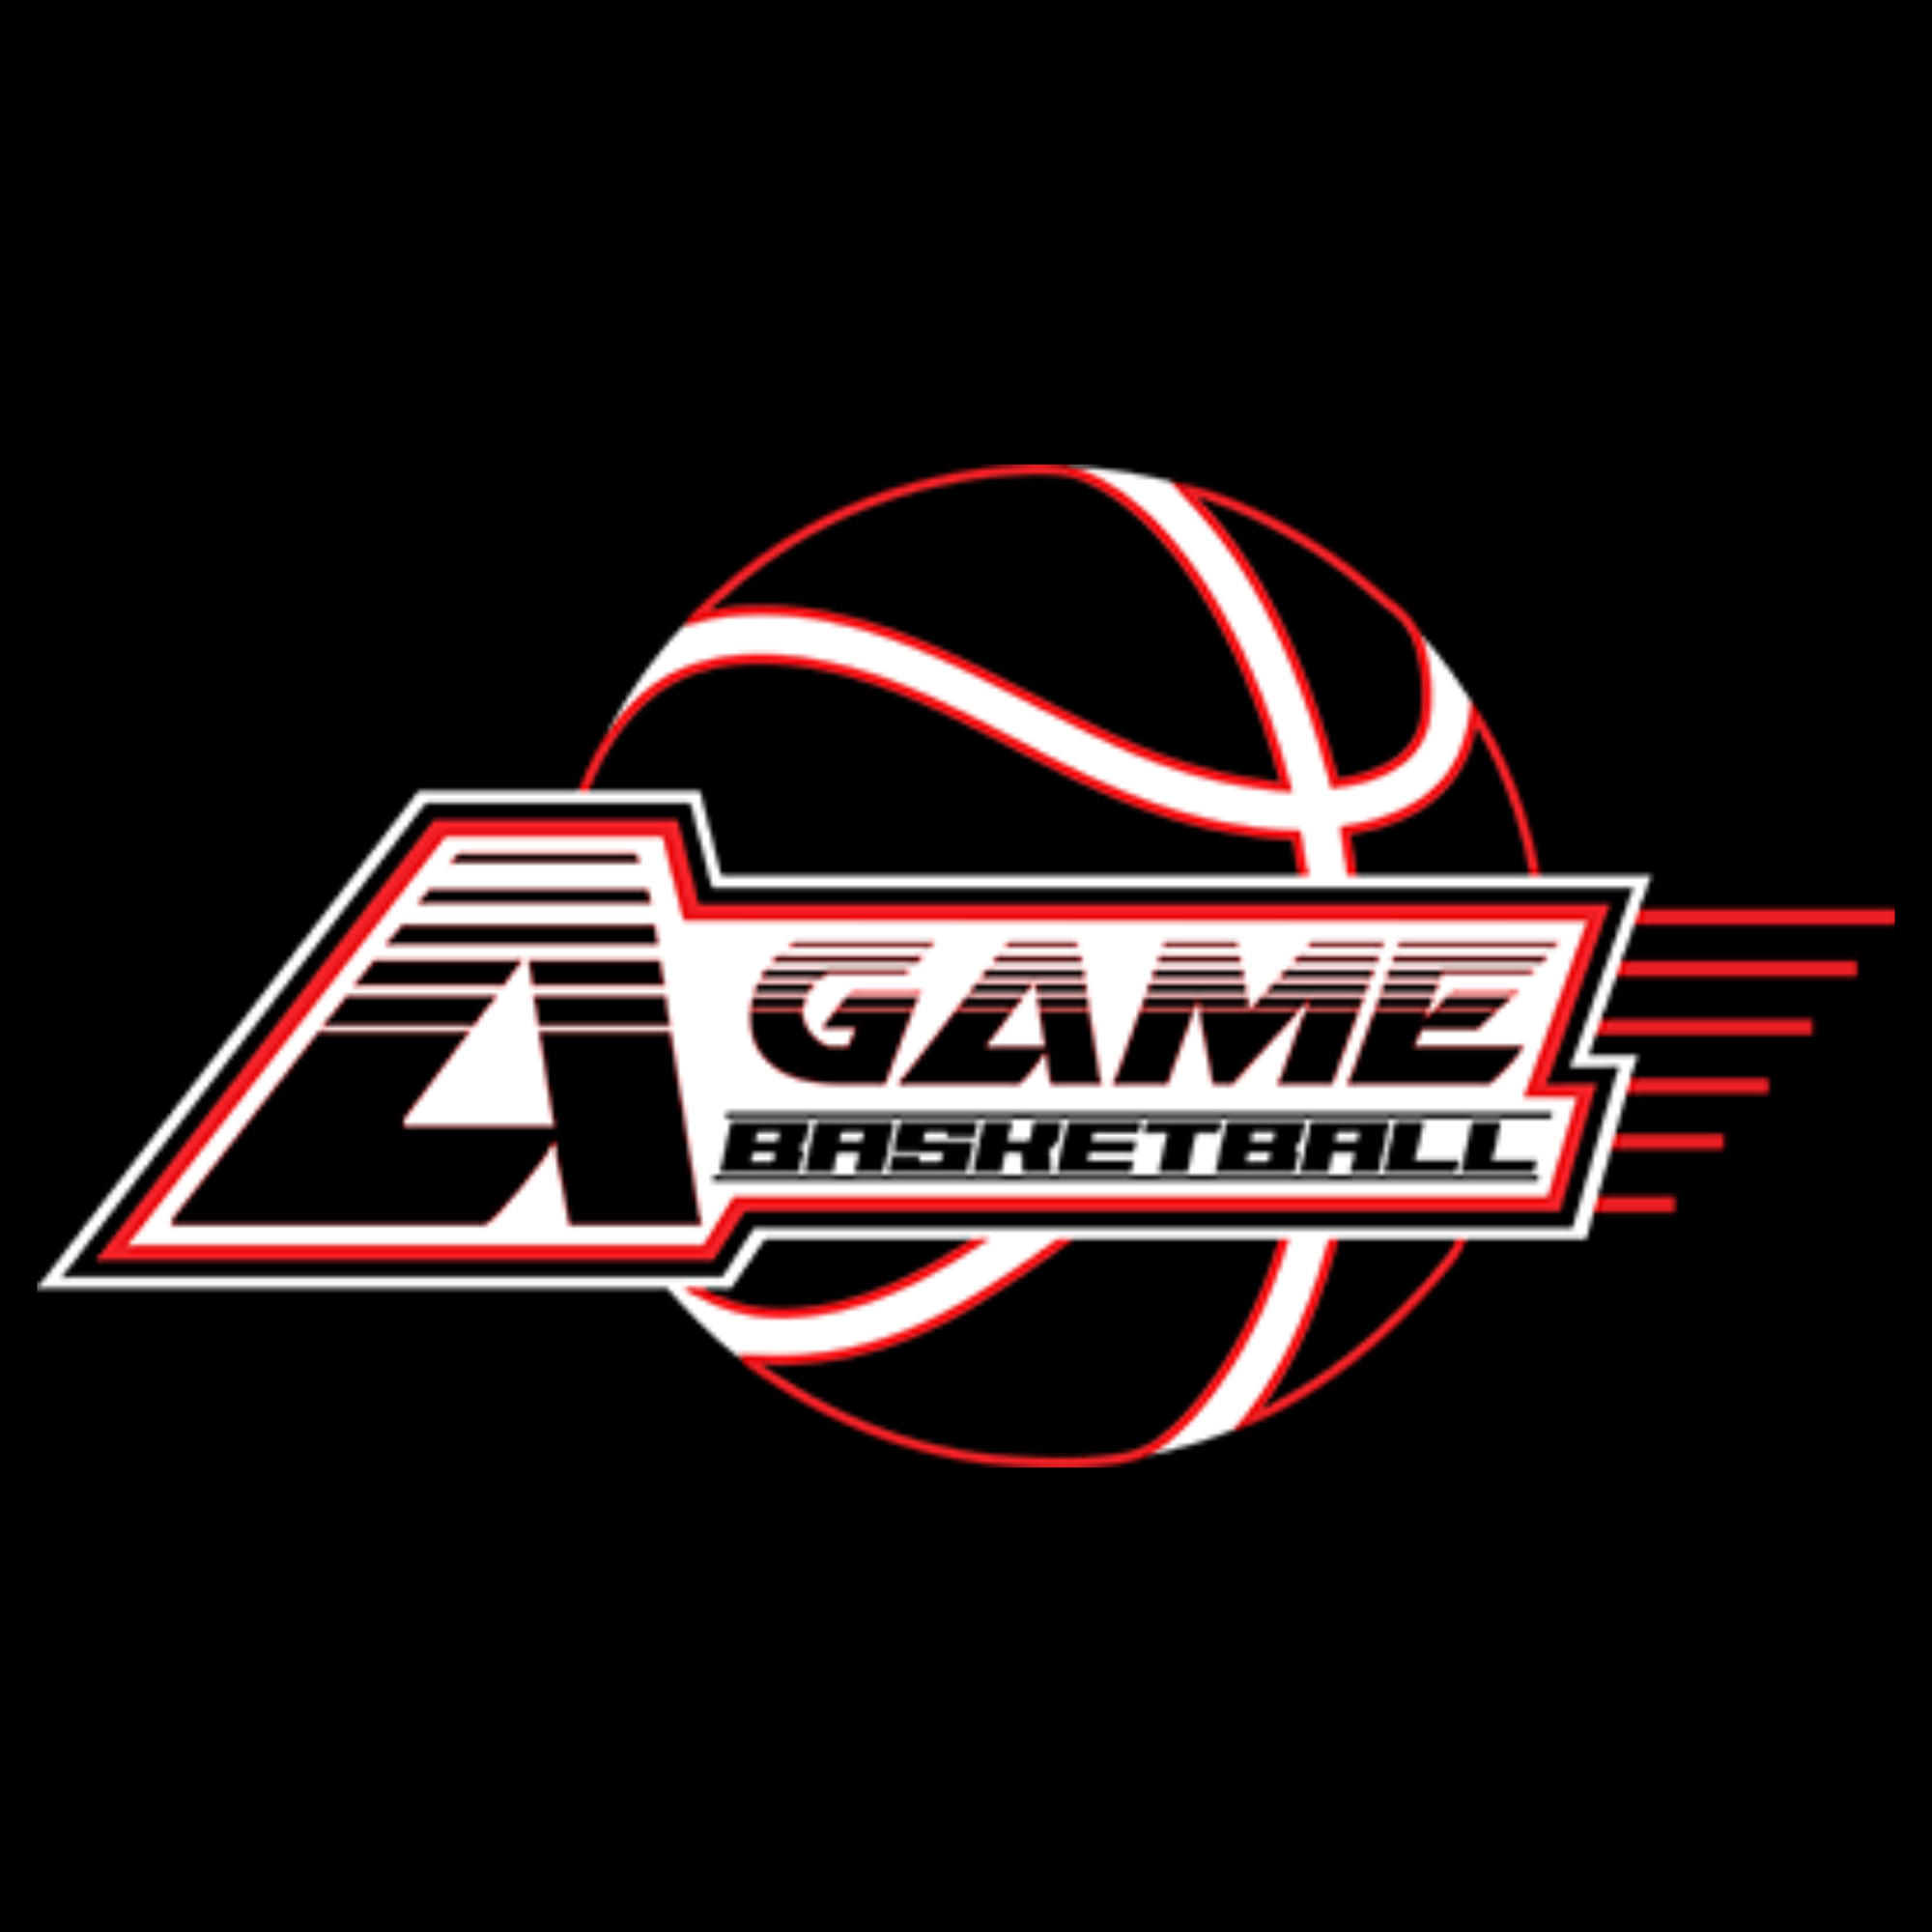 Organization logo for A Game Basketball